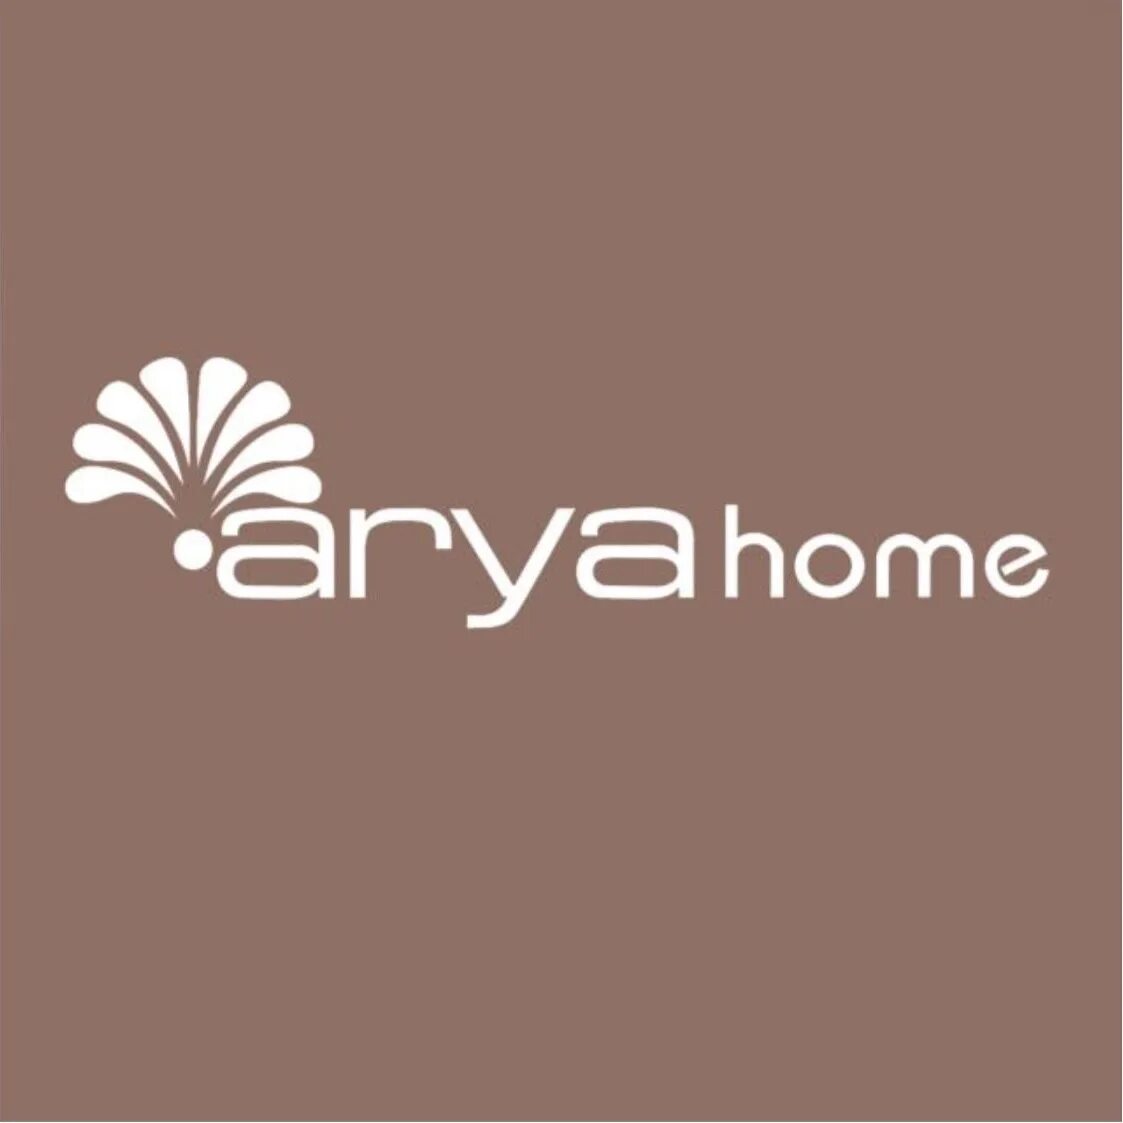 Ария хоме. Arya Home логотип. Arya Home collection логотип. Логотип Arya Home ткани. Рамки Arya Home.